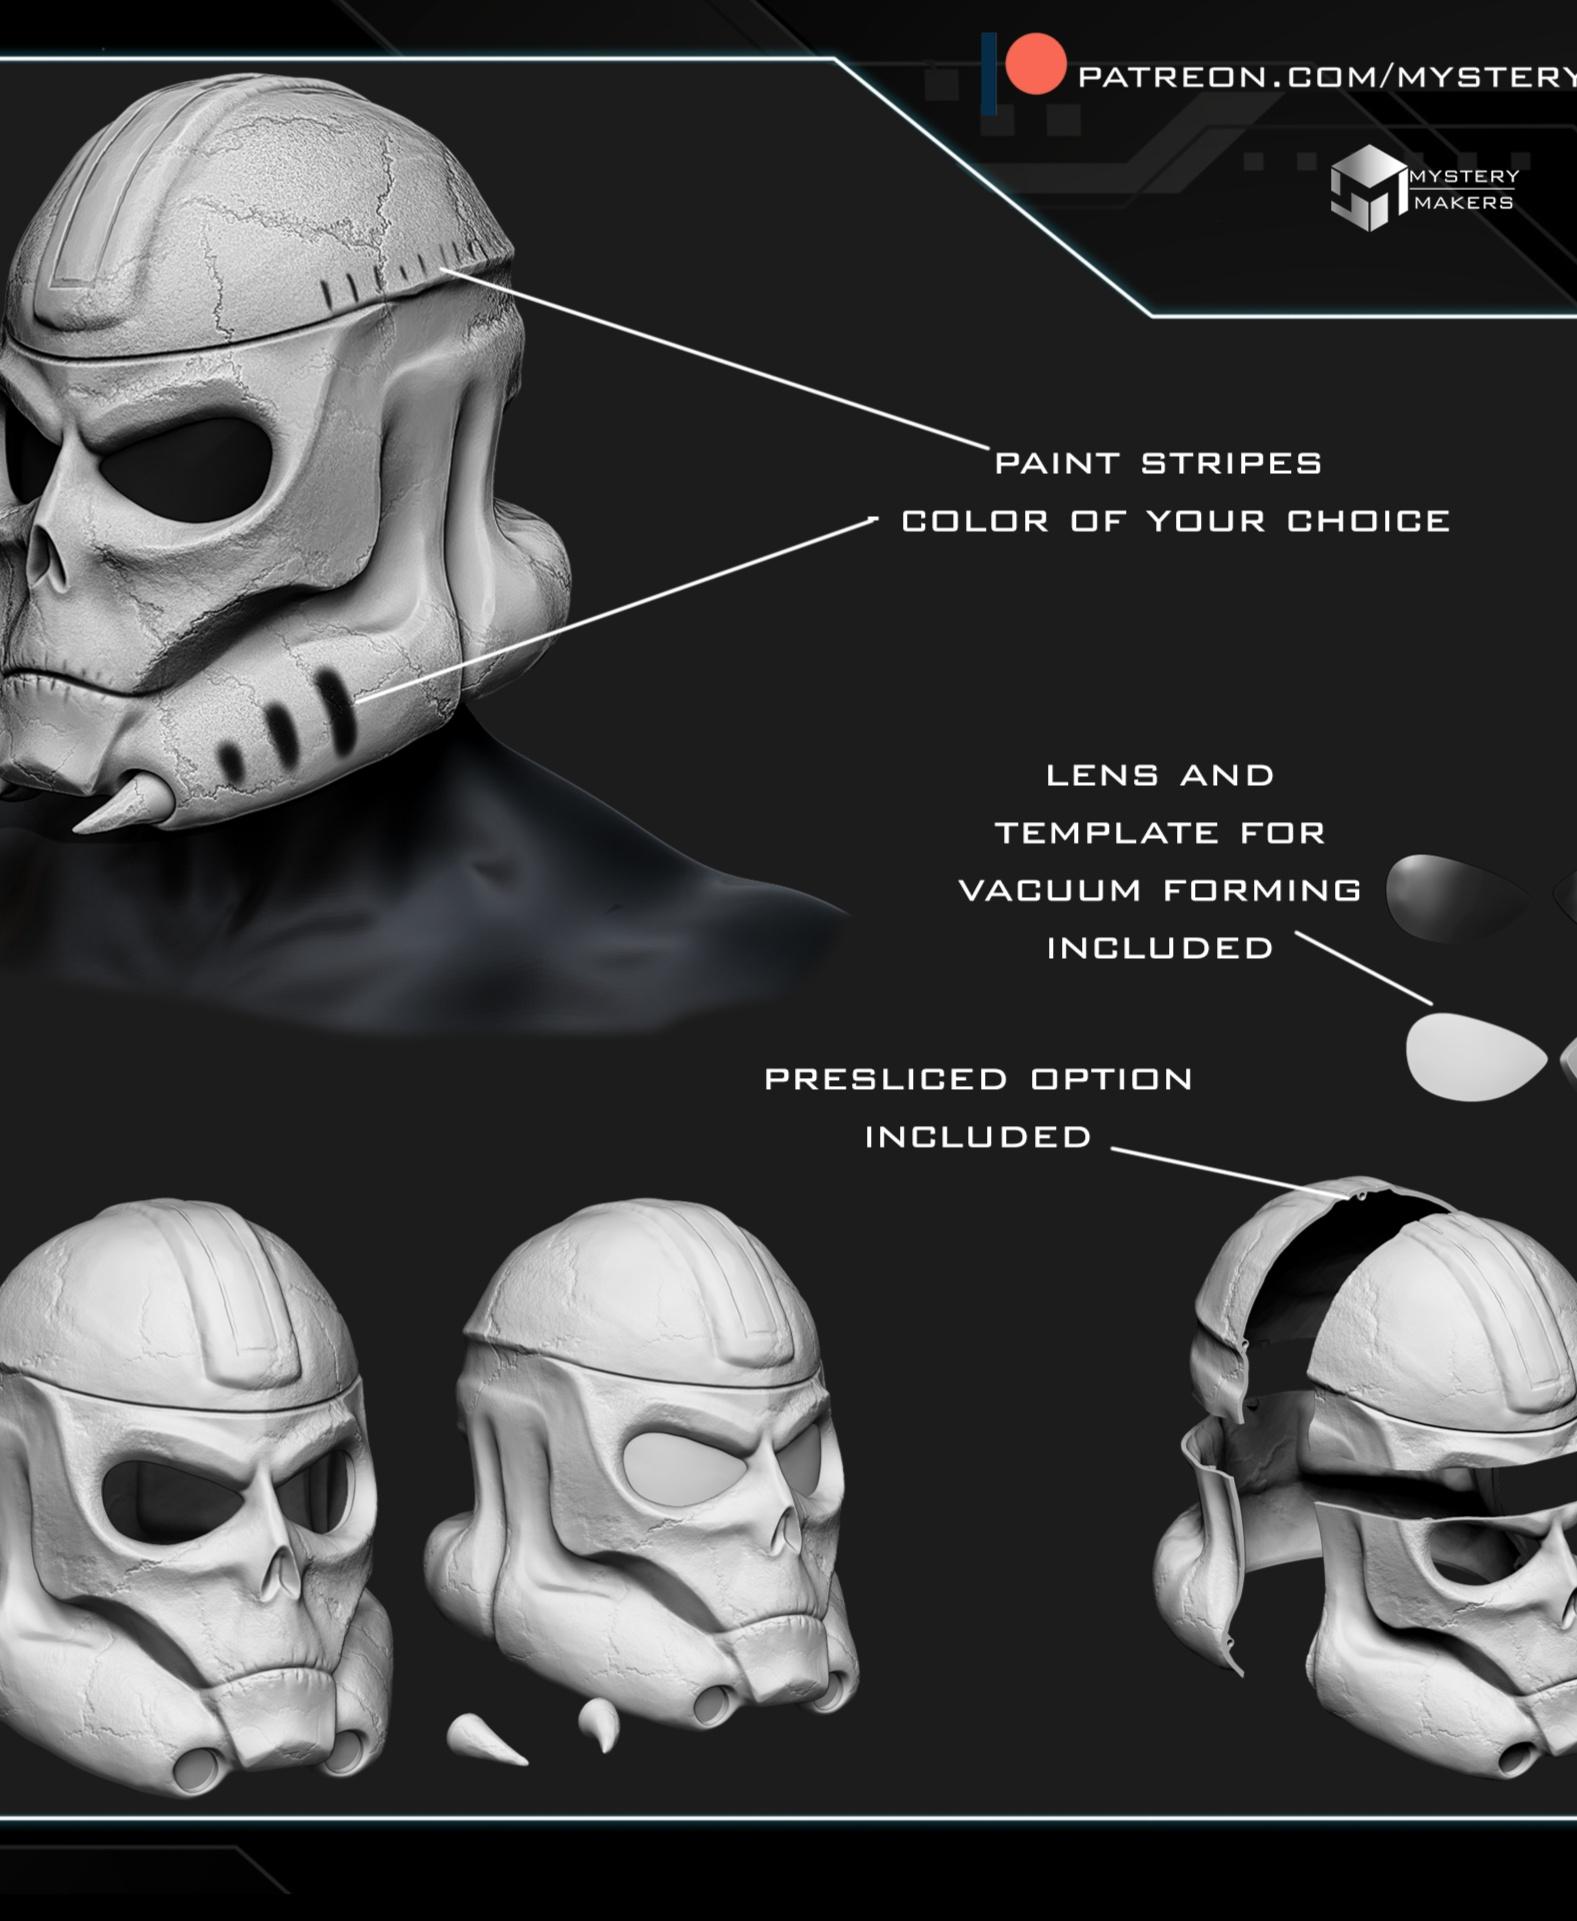 Grim Reaper trooper helmet 3d model